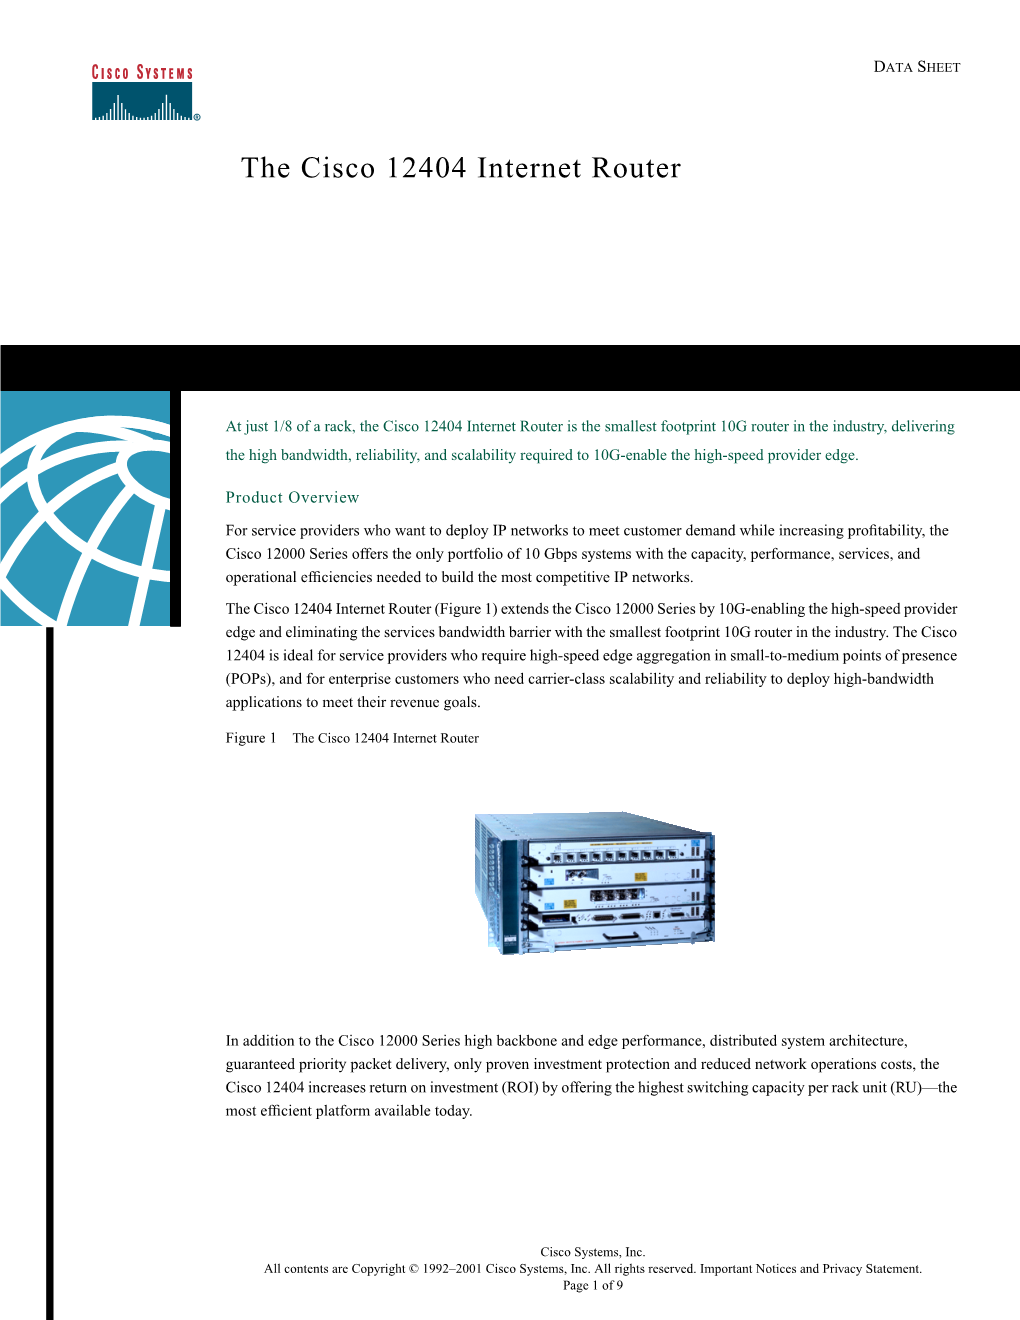 The Cisco 12404 Internet Router